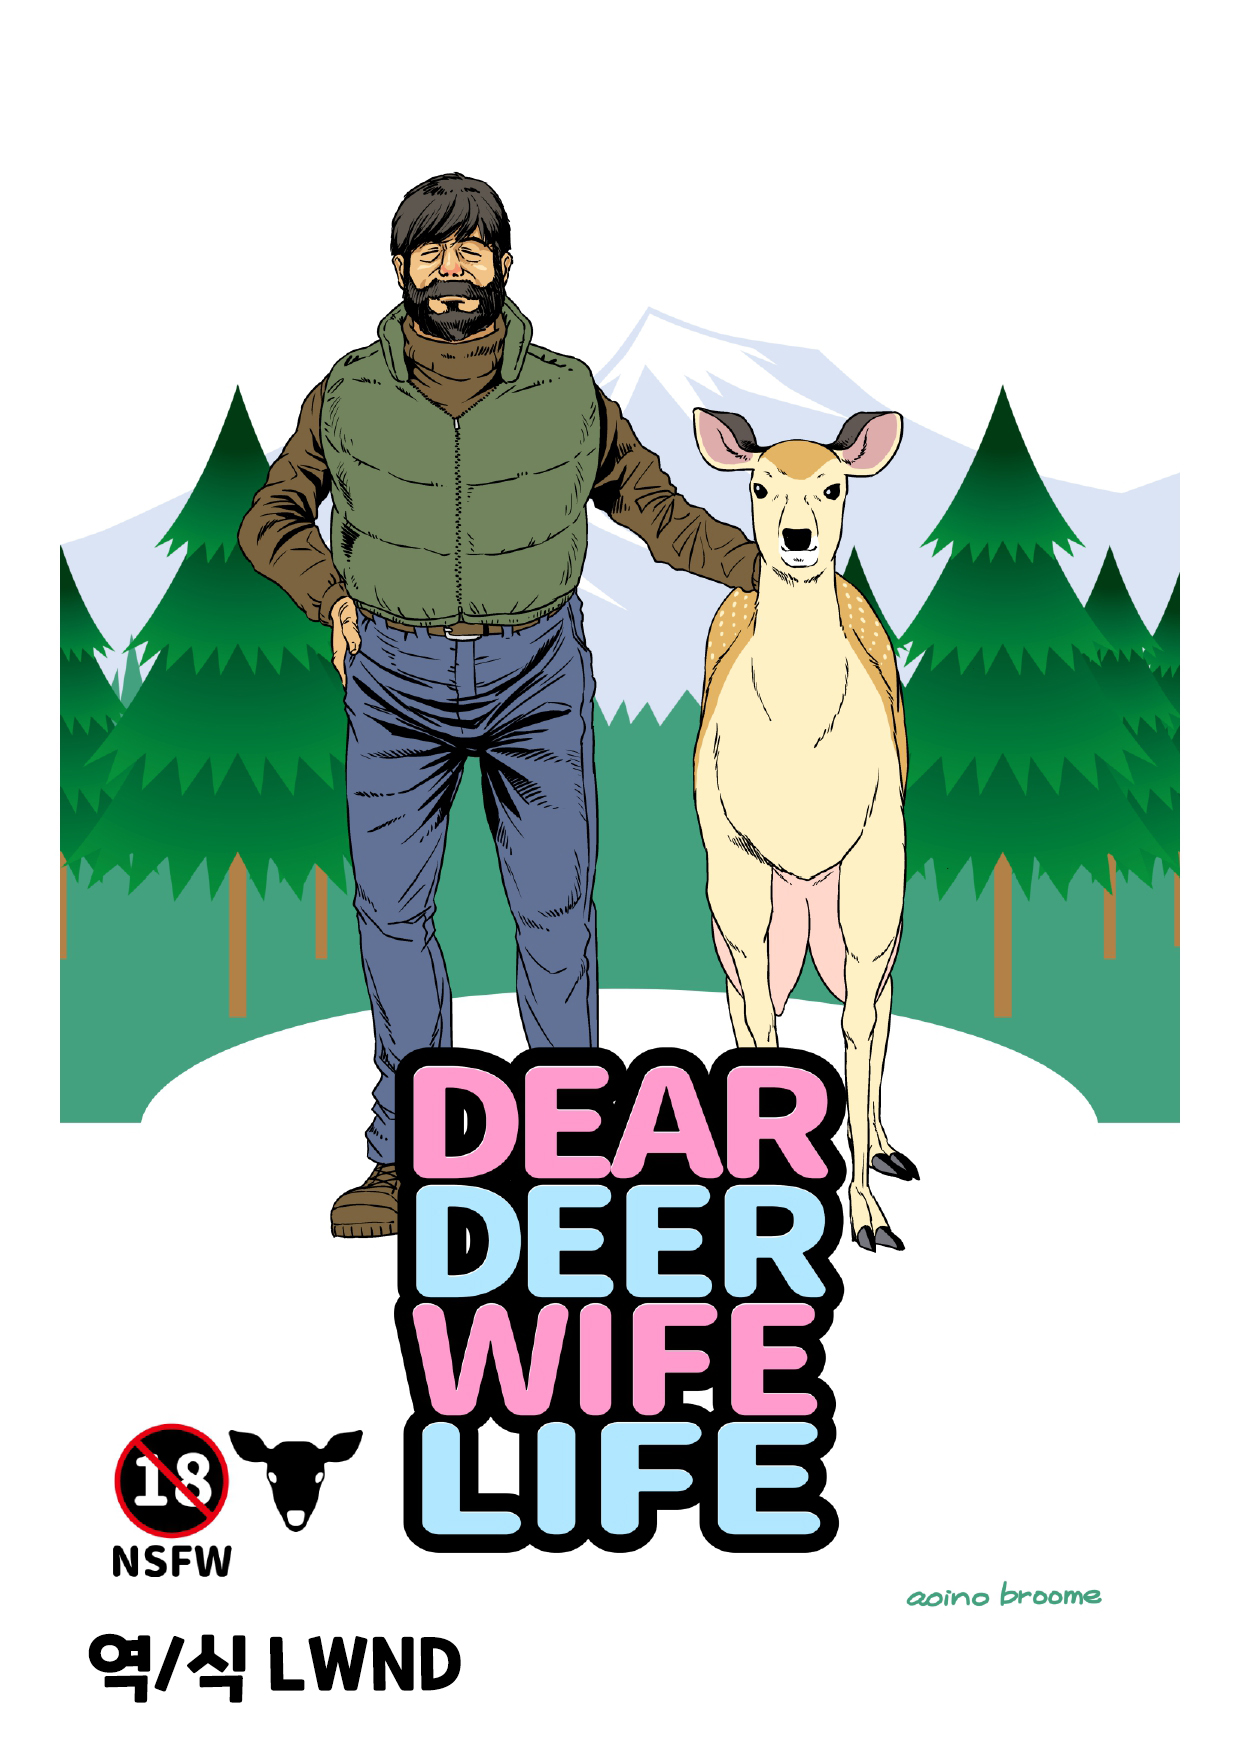 [studio Broome] Dear Deer Wife Life [digital